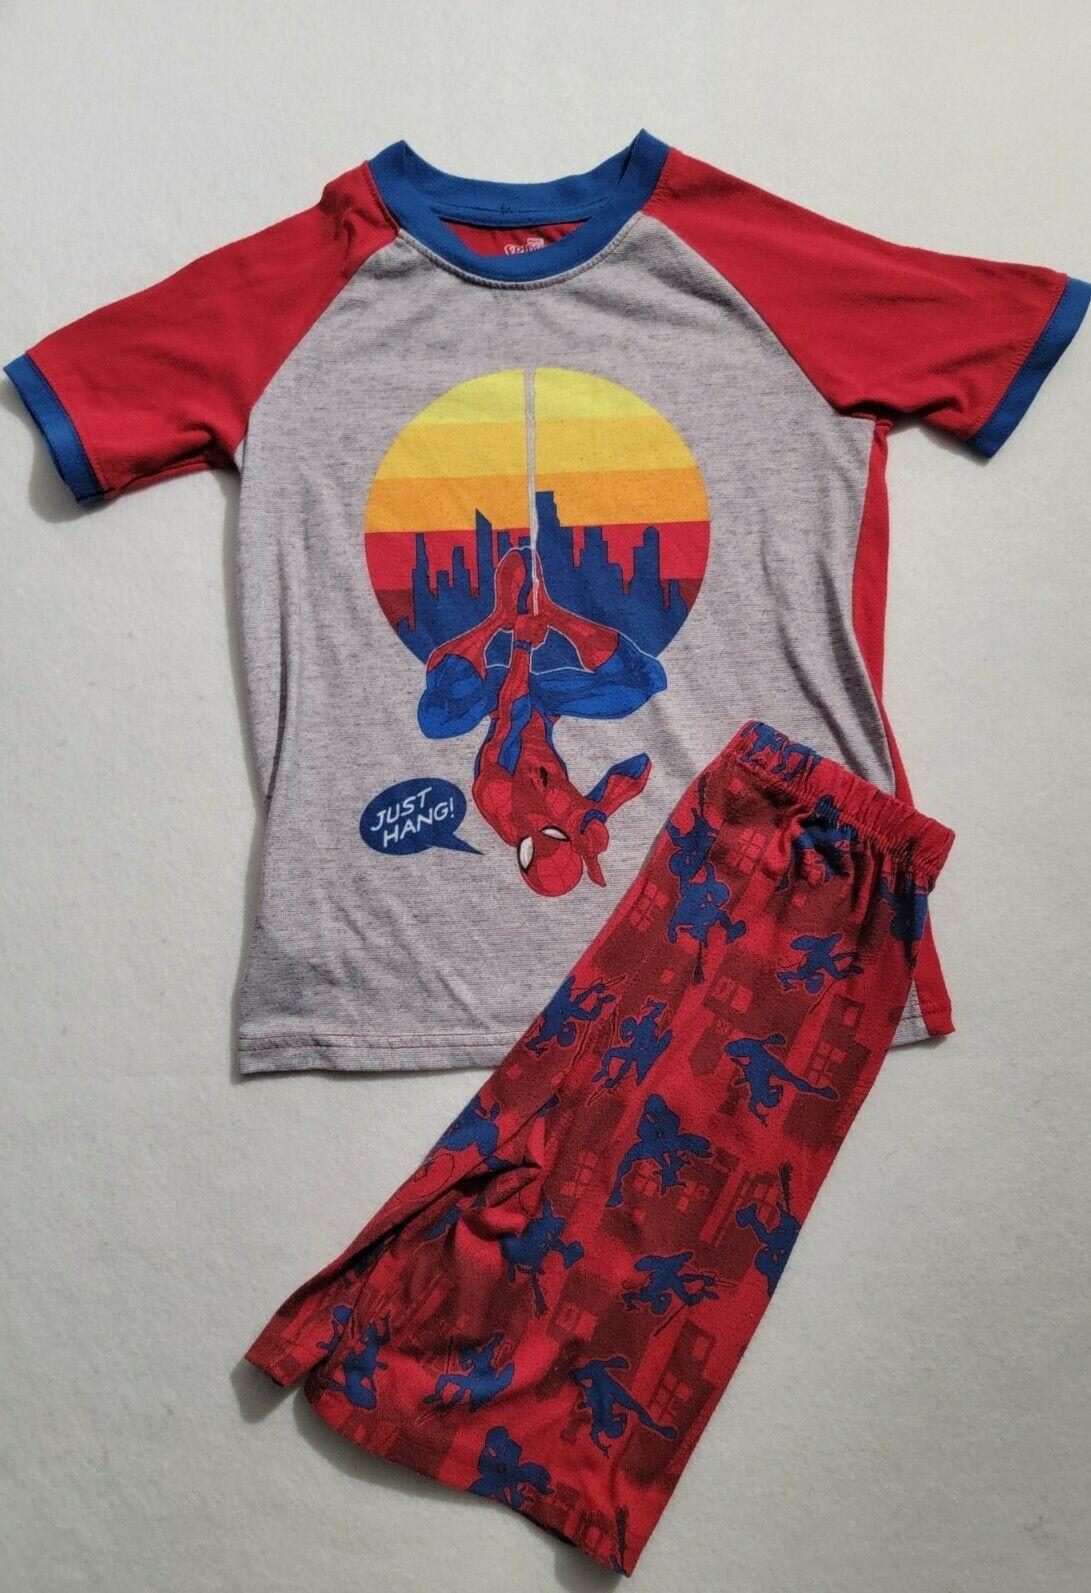 Marvel Spiderman "just Hang" Pajama Set Boys Size 8